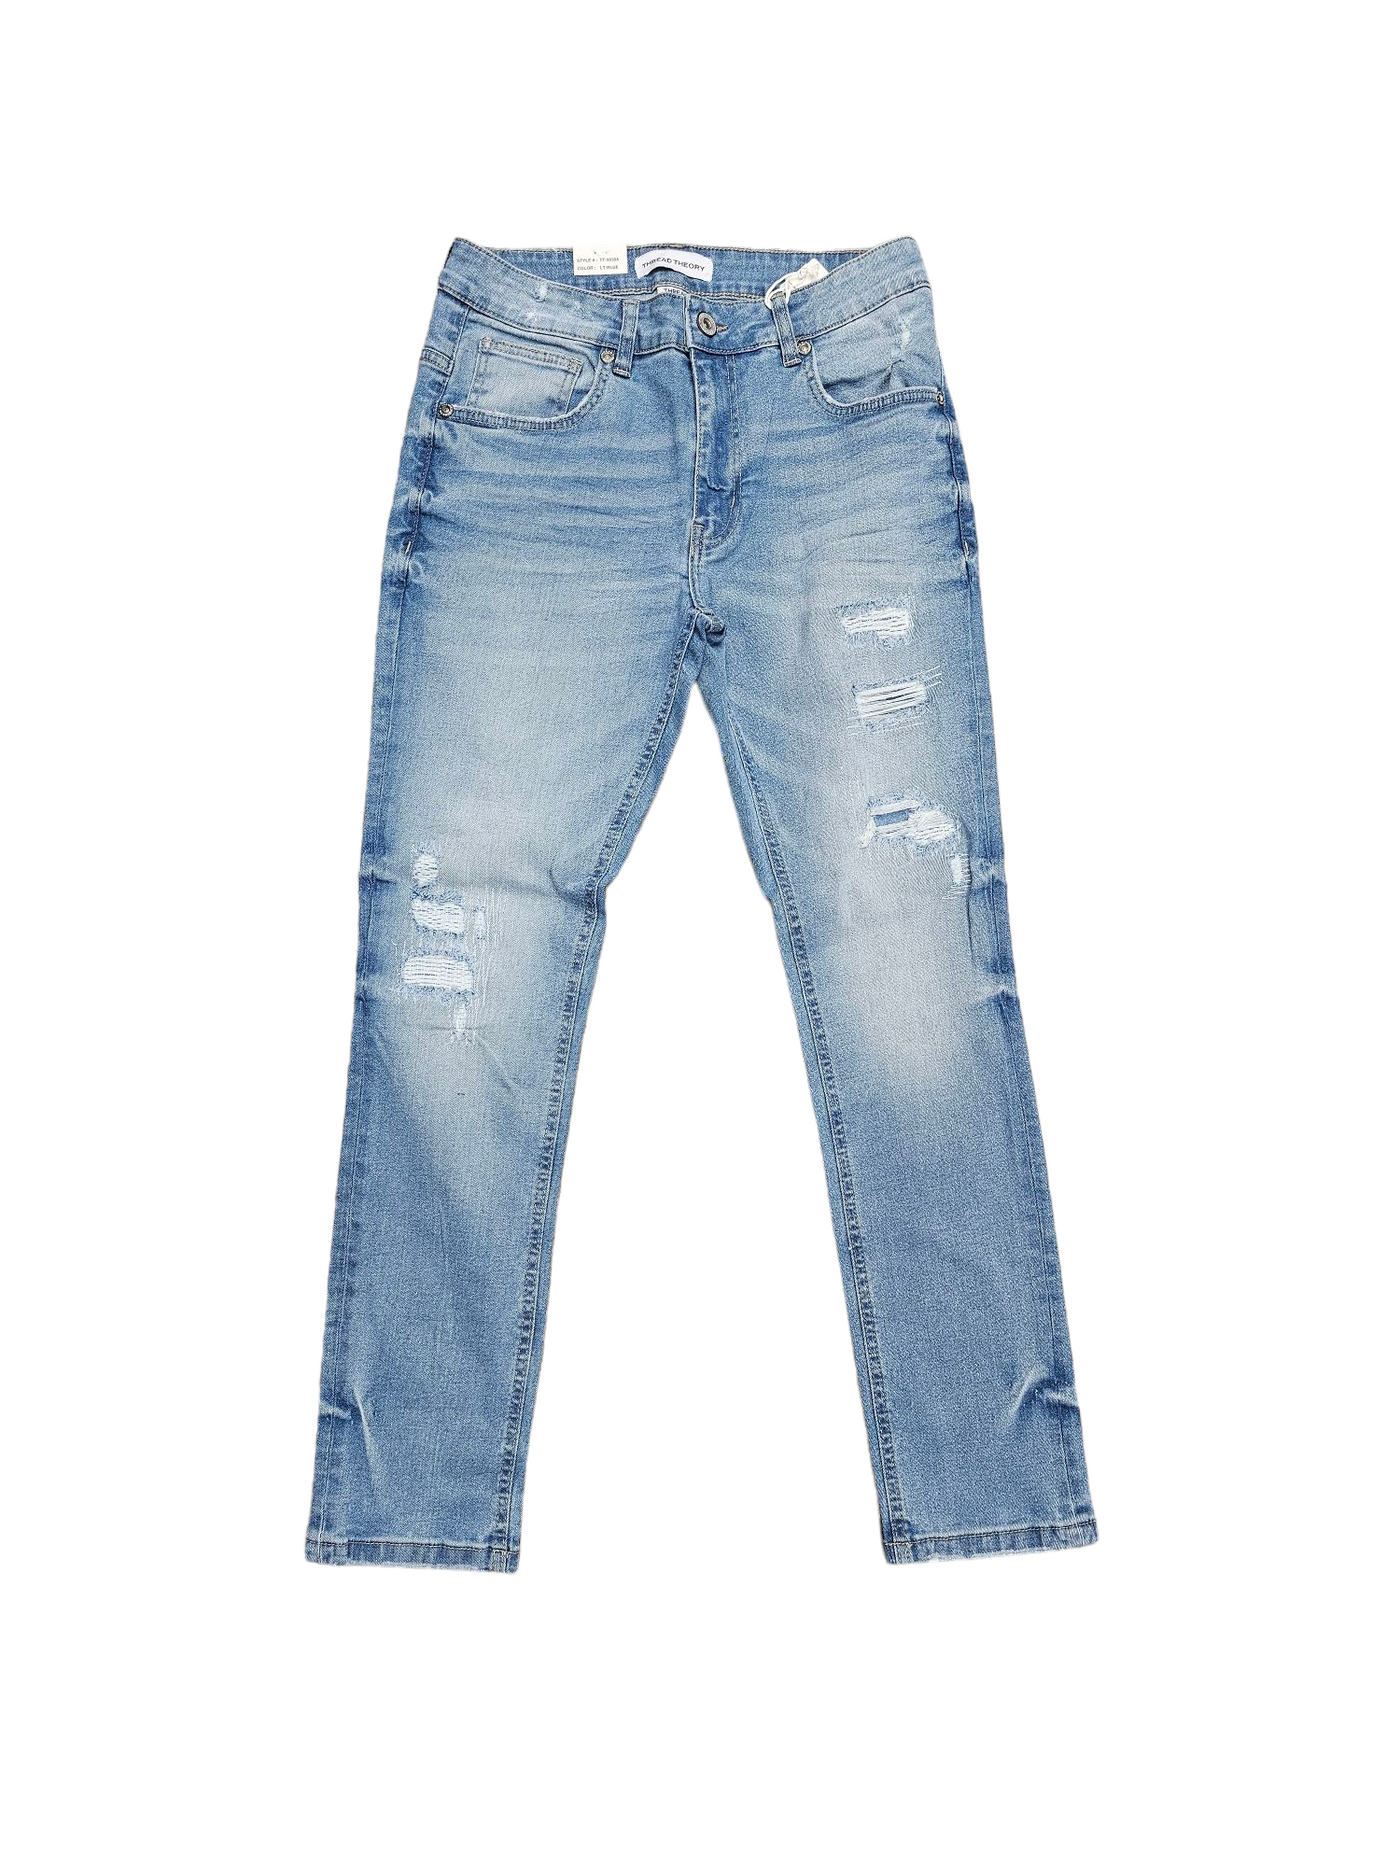 Thread Theory Men's Denim Jeans Light Blue 80304